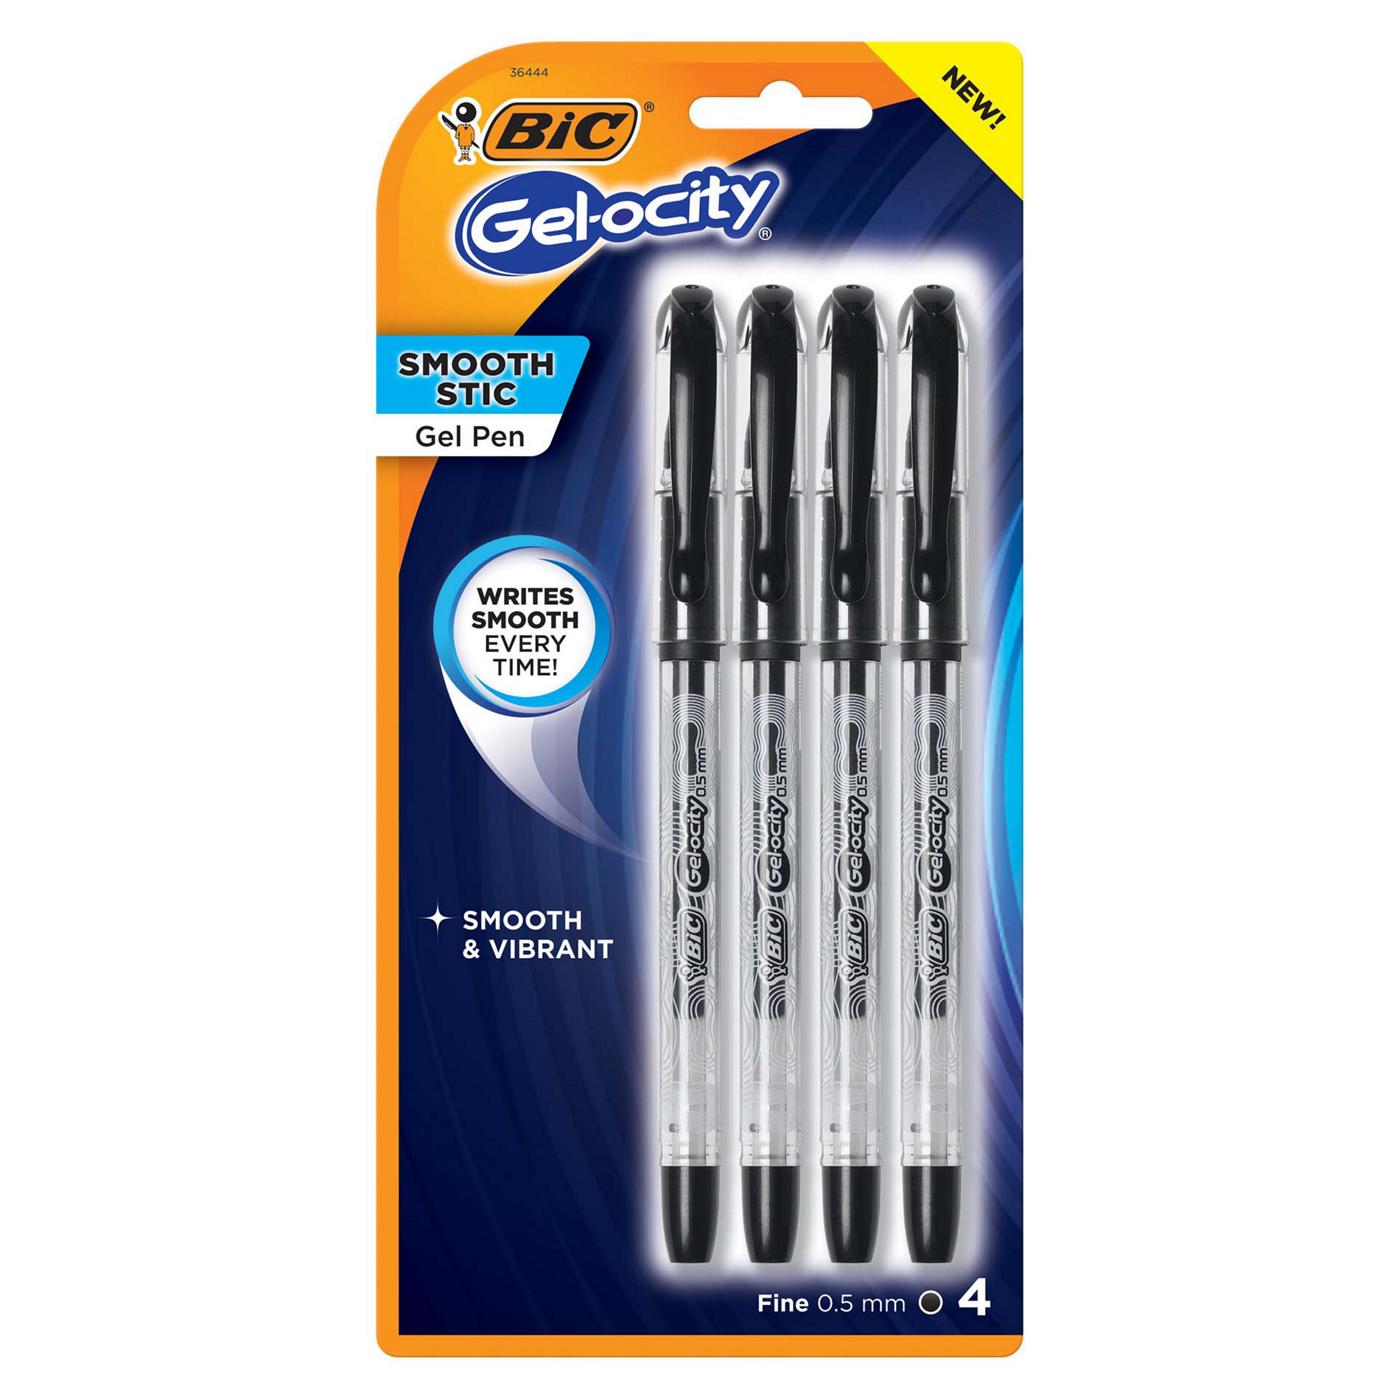 BIC Gel-ocity Smooth Stic 0.5mm Gel Pens - Black Ink - Shop Pens at H-E-B